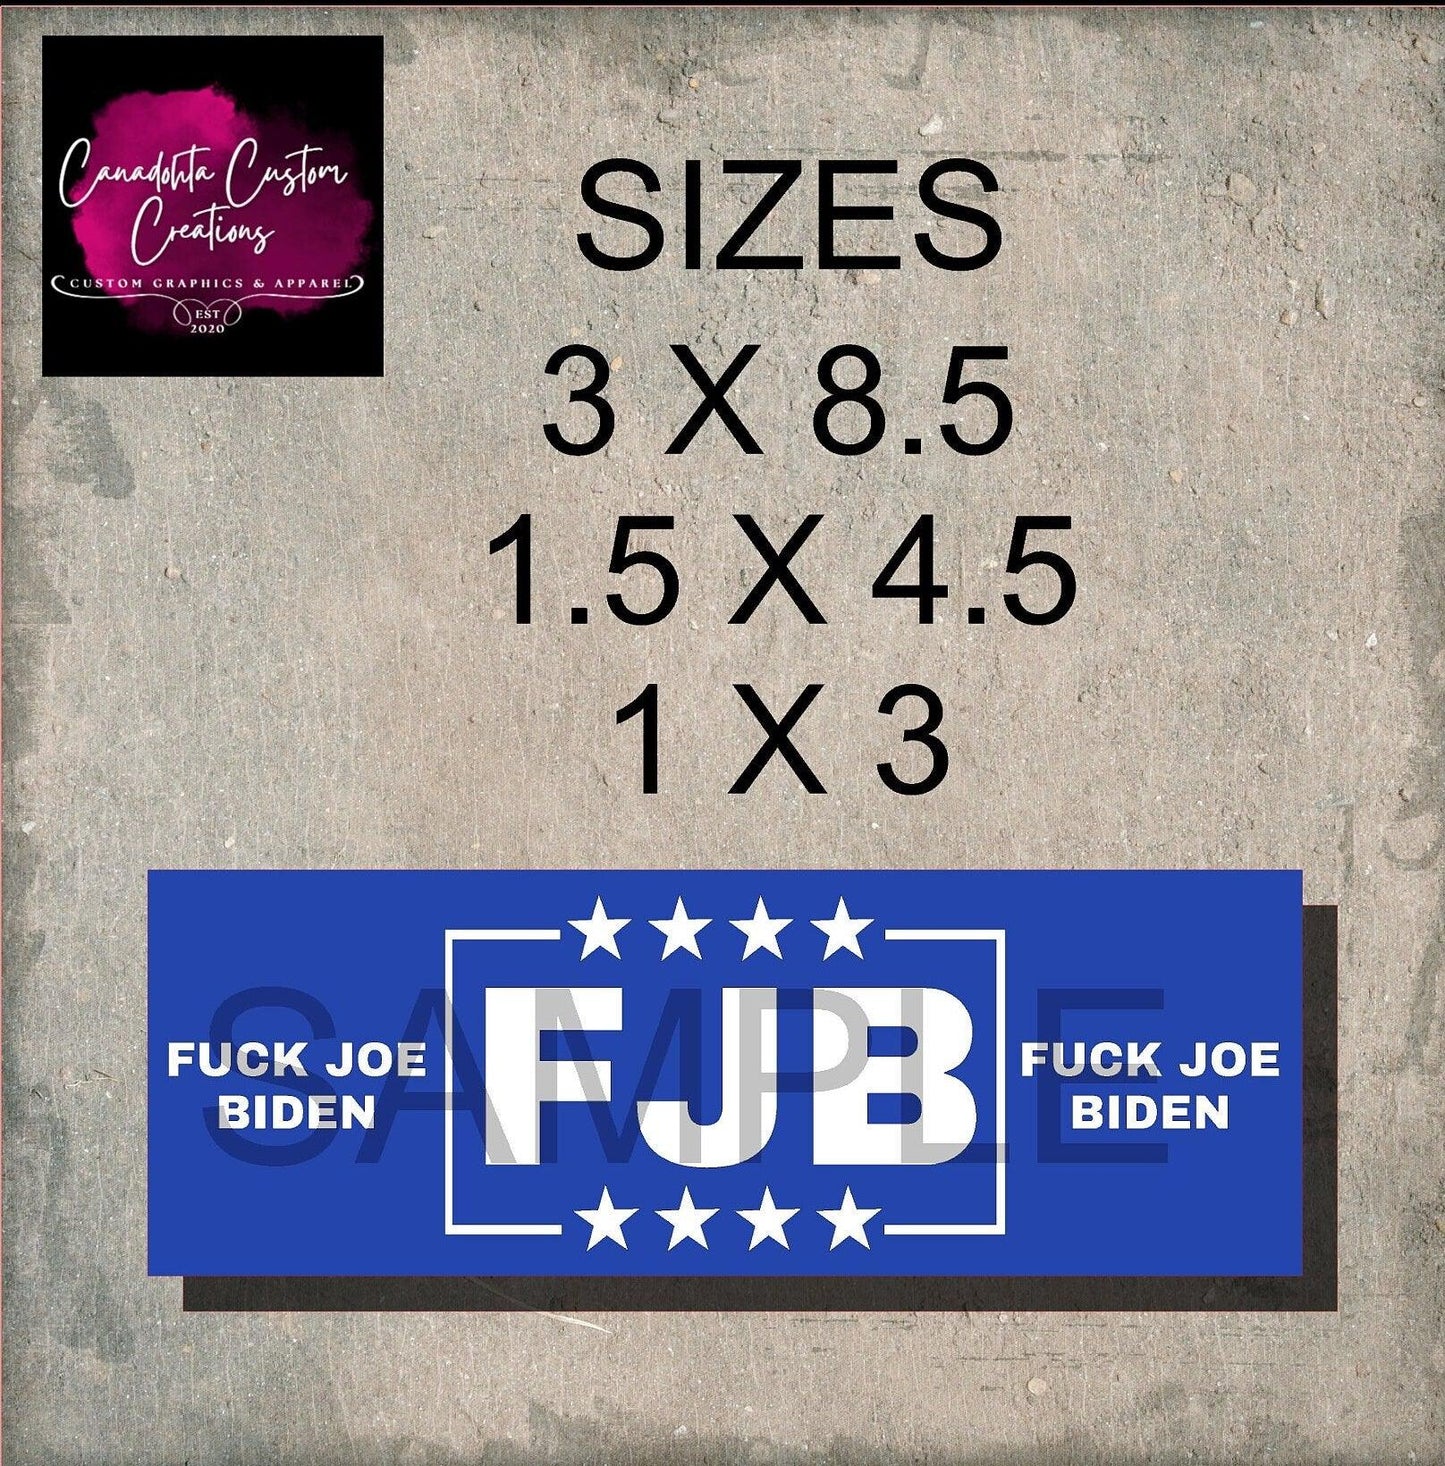 FJB Fuck Joe Biden Sticker Decal, Car Decal, Laptop Decal, Window decal, custom sticker decal - Canadohta Custom Creations LLC